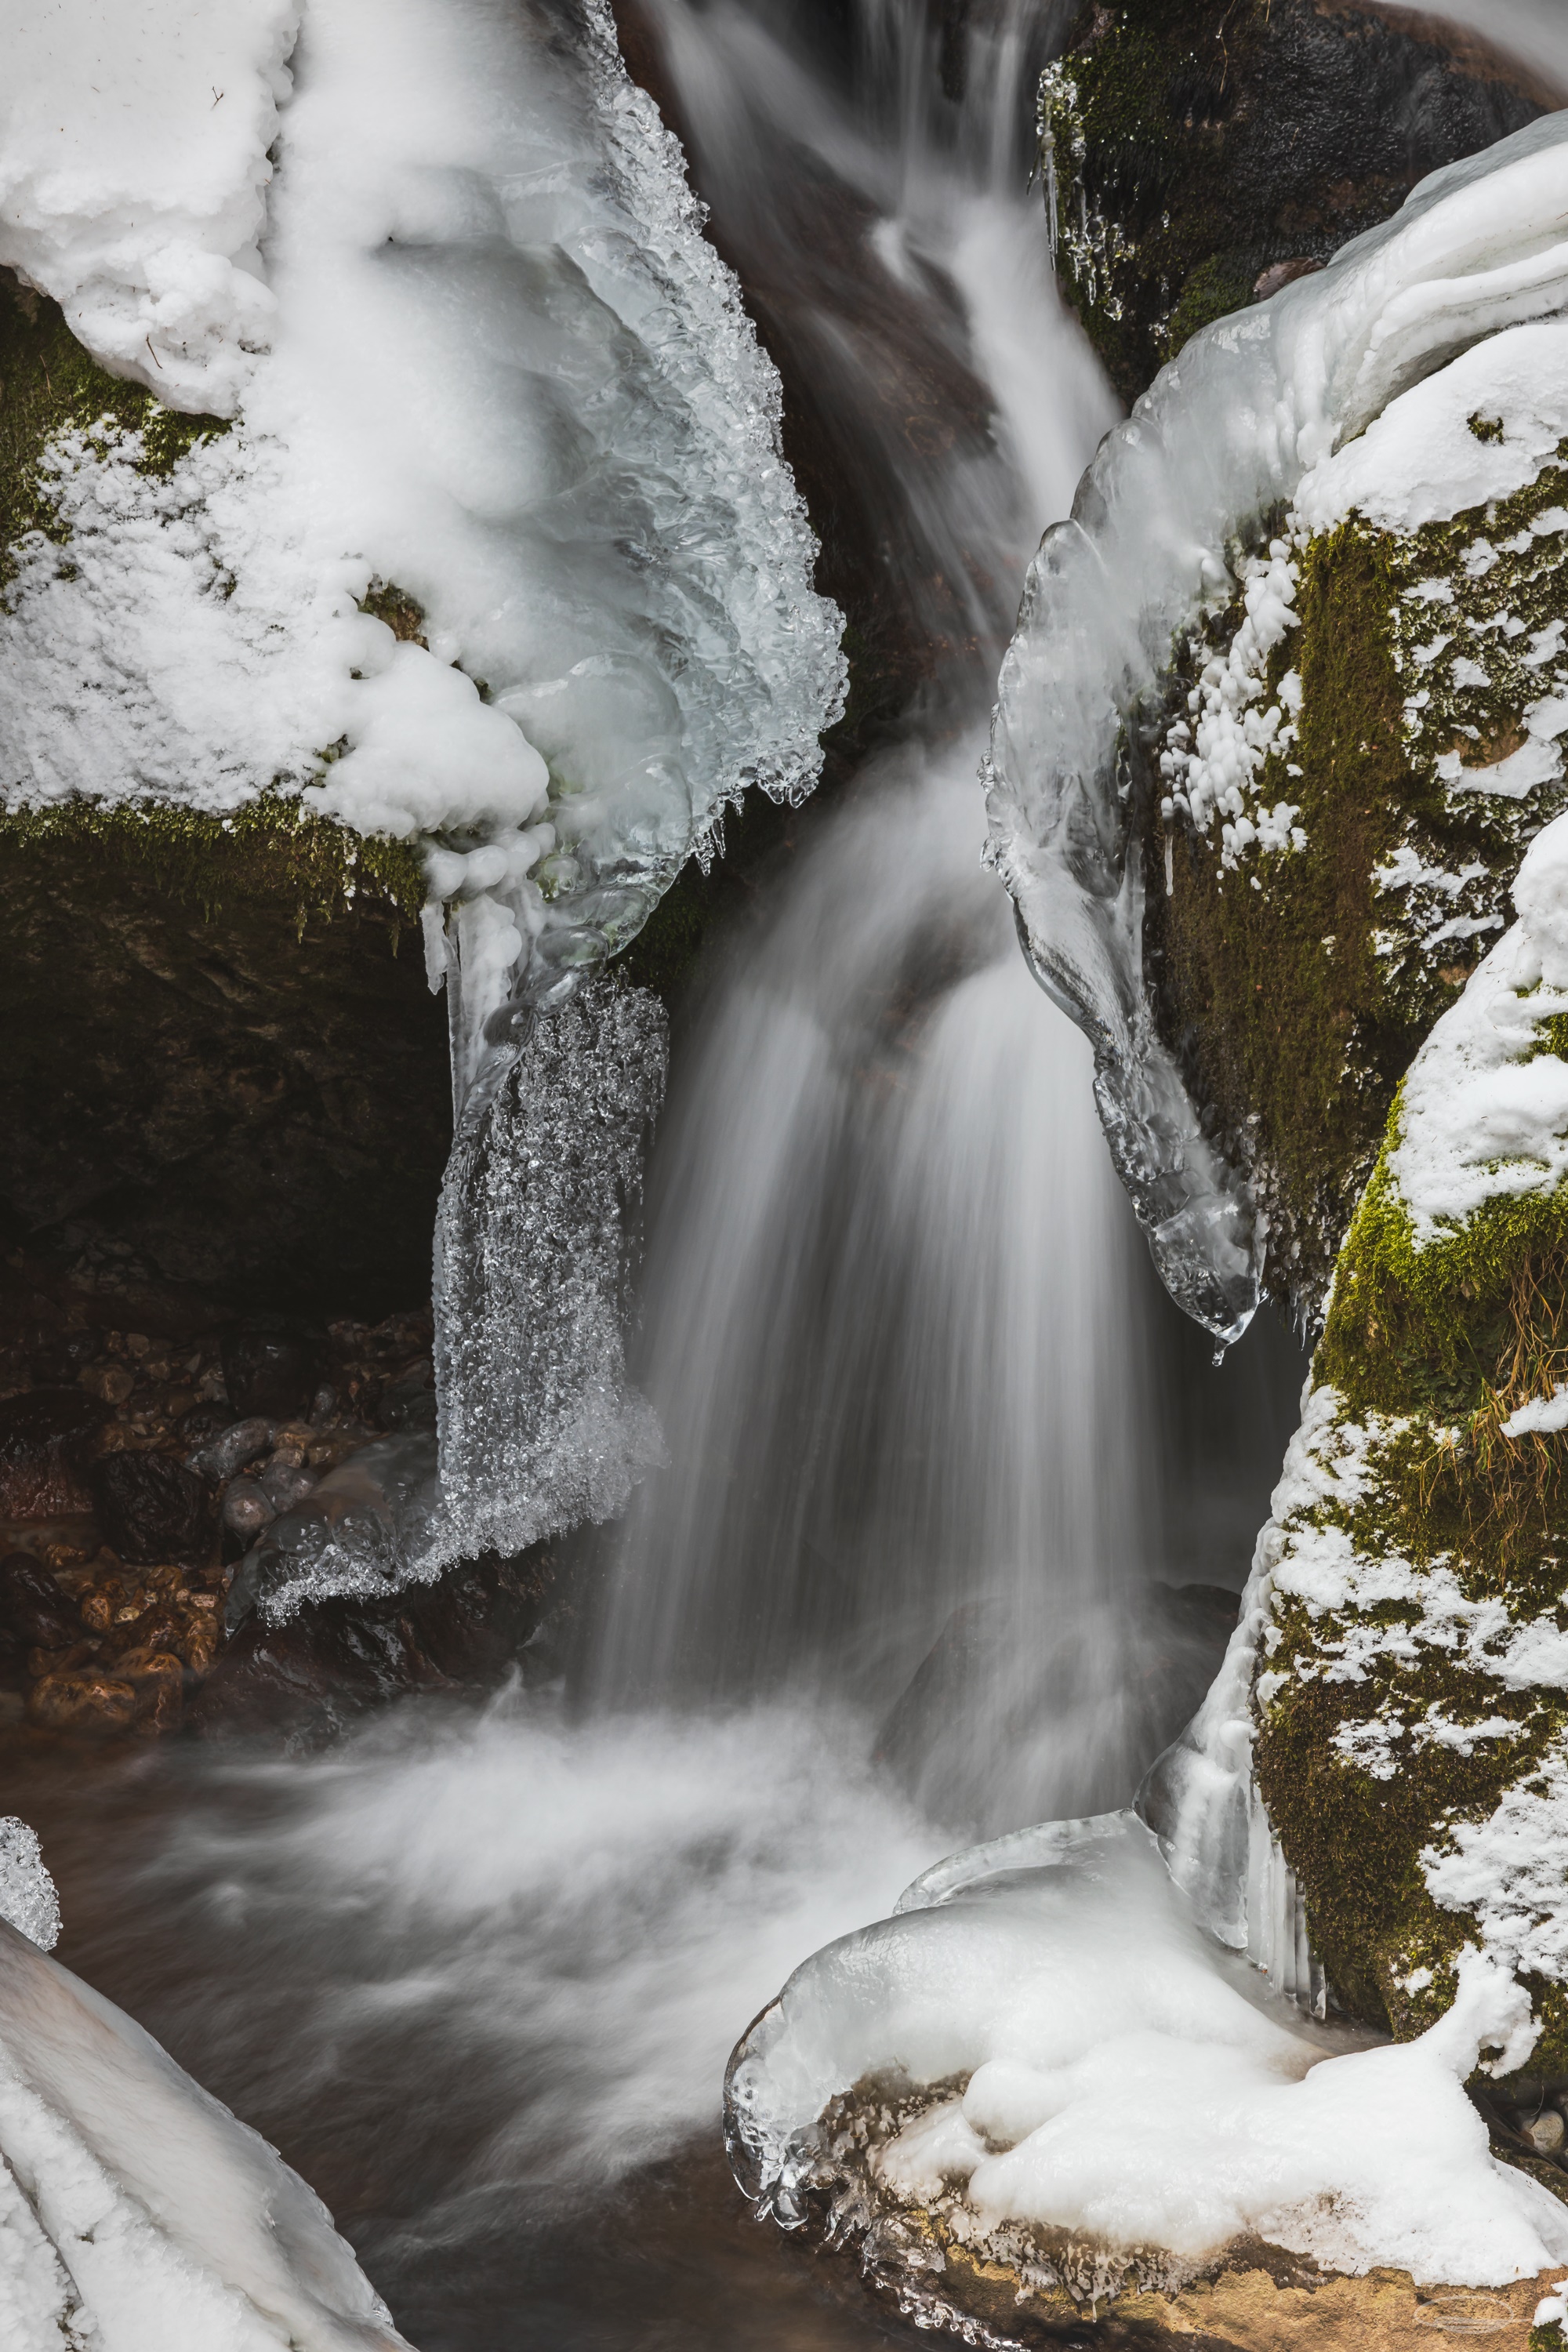 Wintertime: Freezing Water and Icy Waterfalls - Hartelsgraben / Gesäuse - Johann Piber